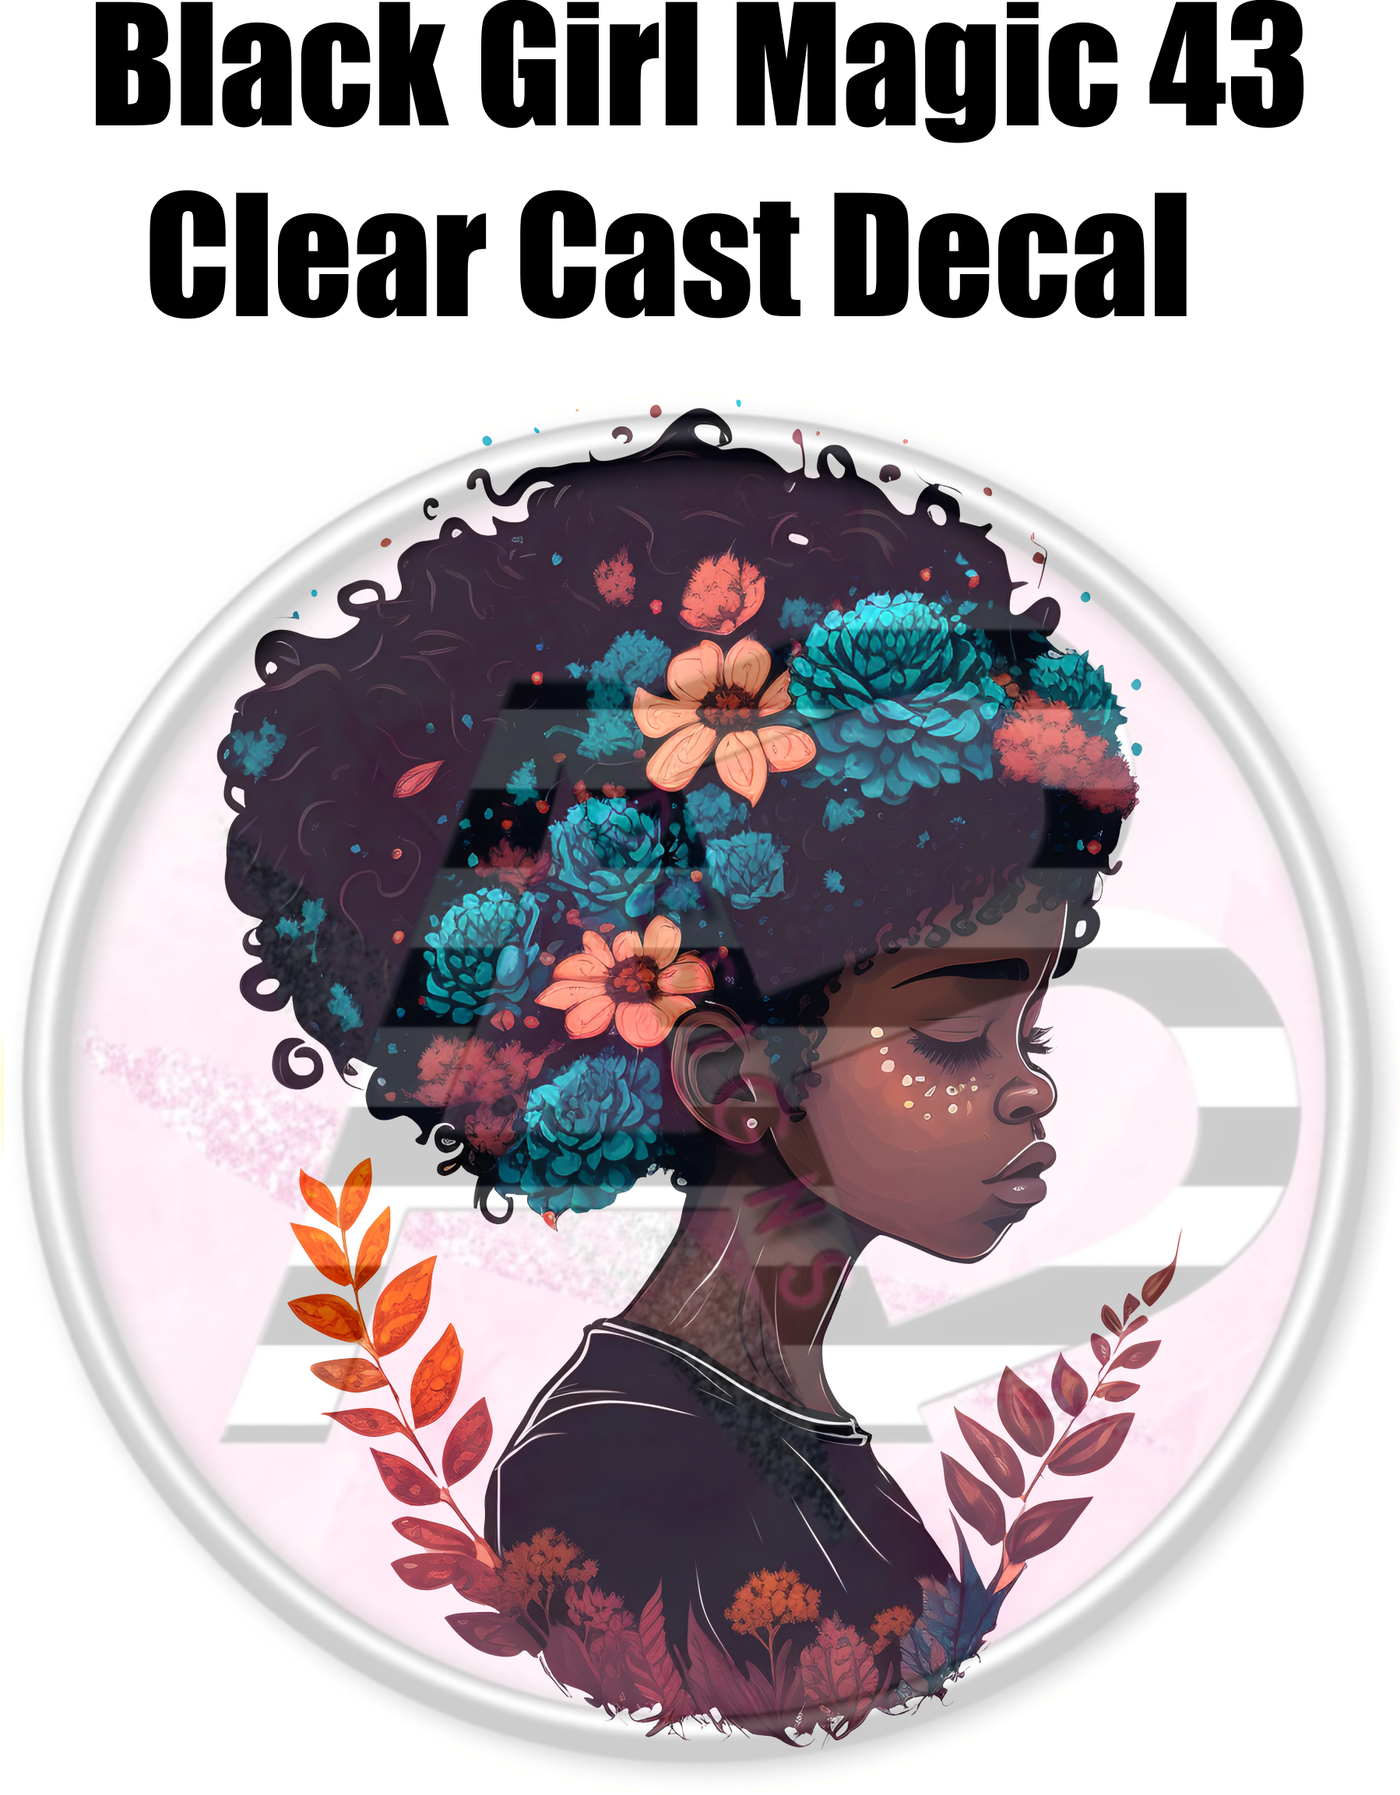 Black Girl Magic 43 - Clear Cast Decal